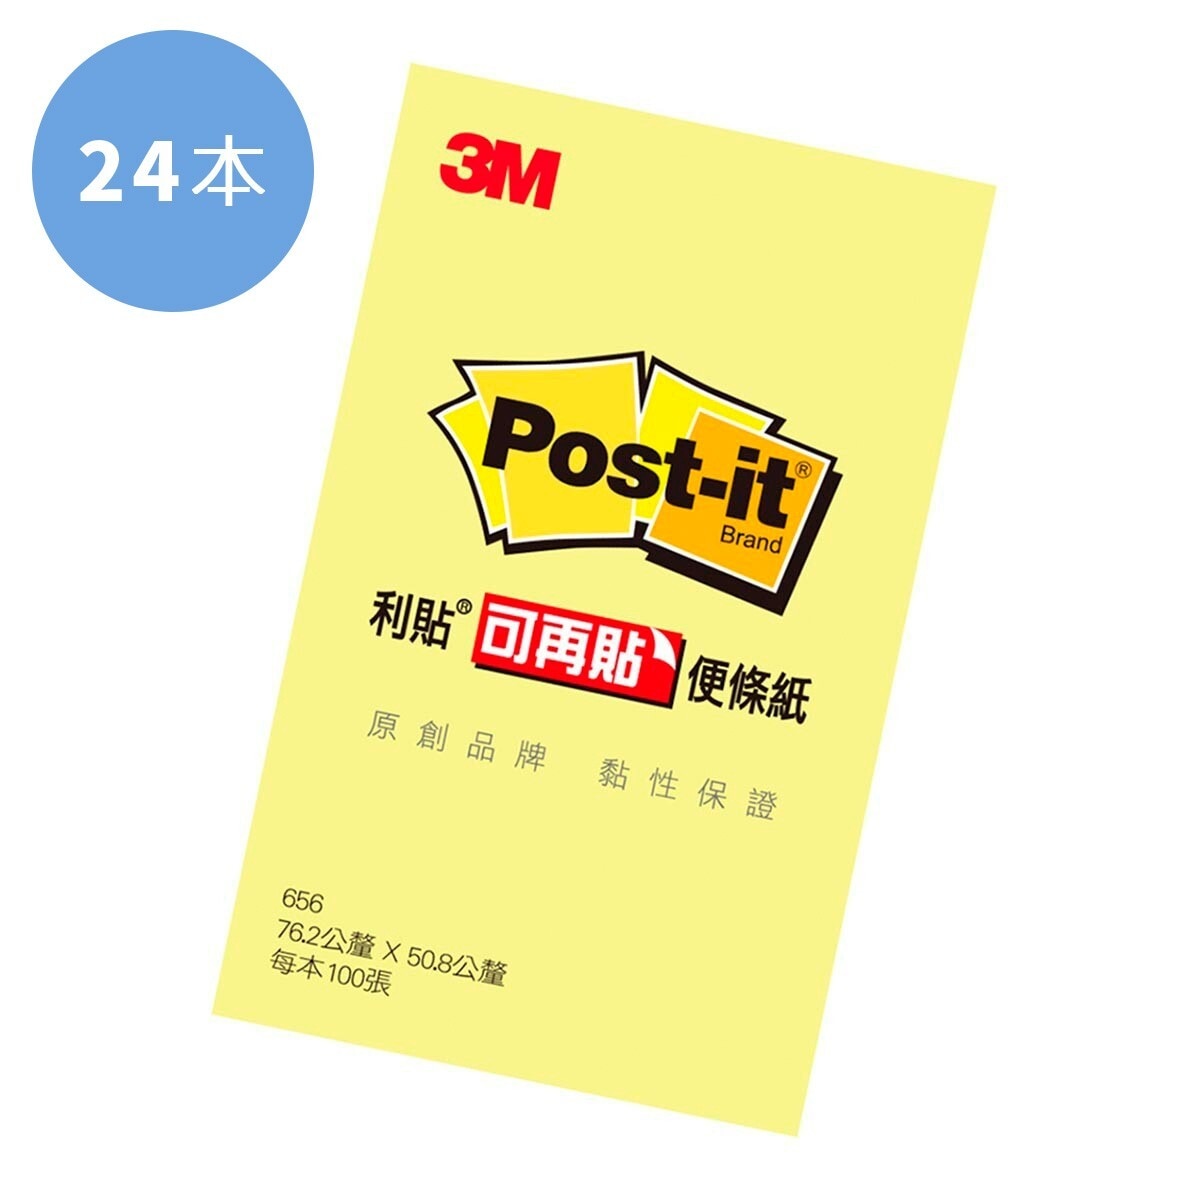 3M Post-it 可再貼便條紙黃色 50.8公釐 X 76.2公釐 X 24本 656-1